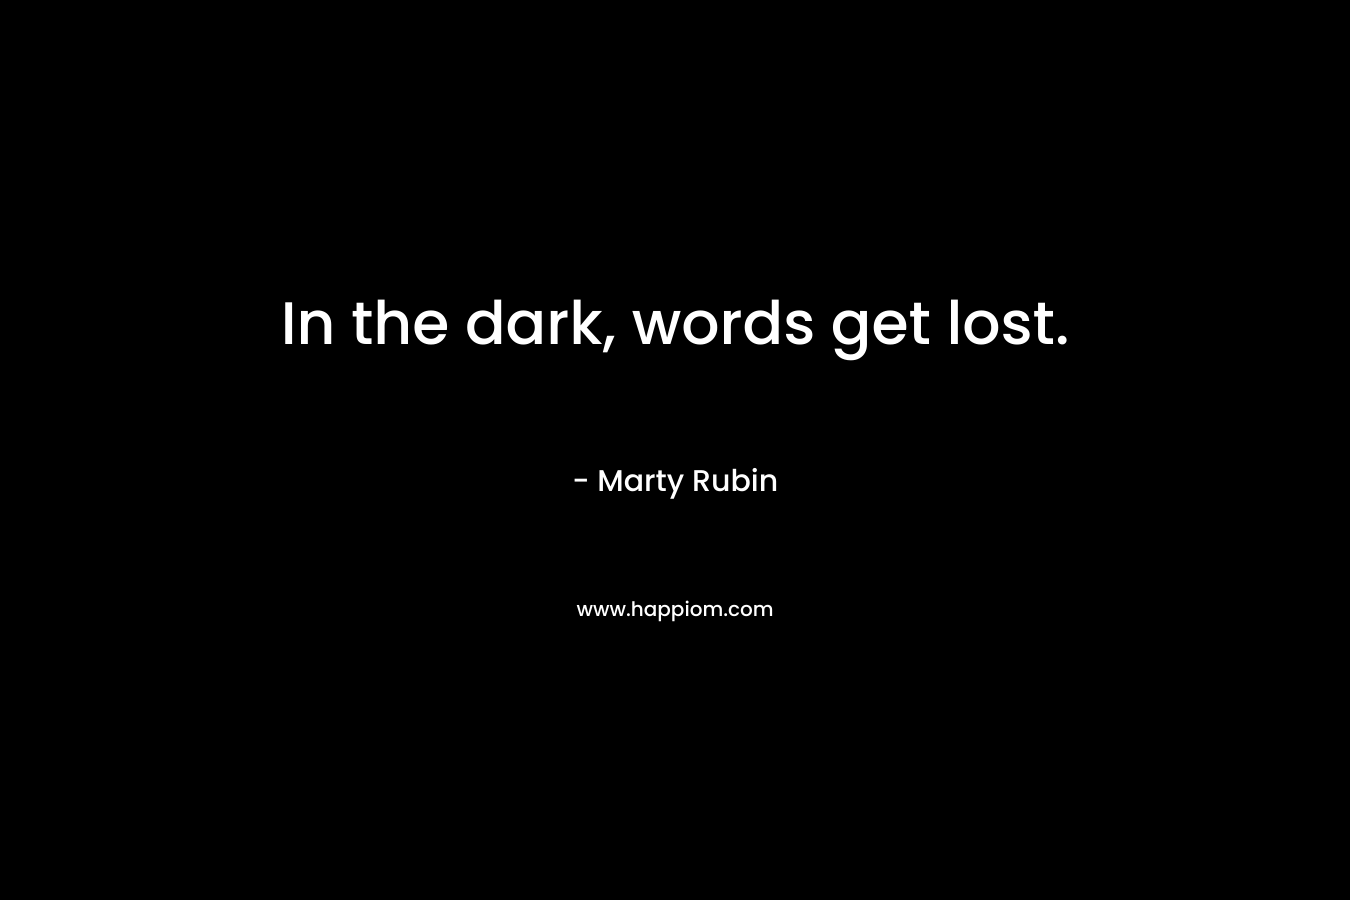 In the dark, words get lost.